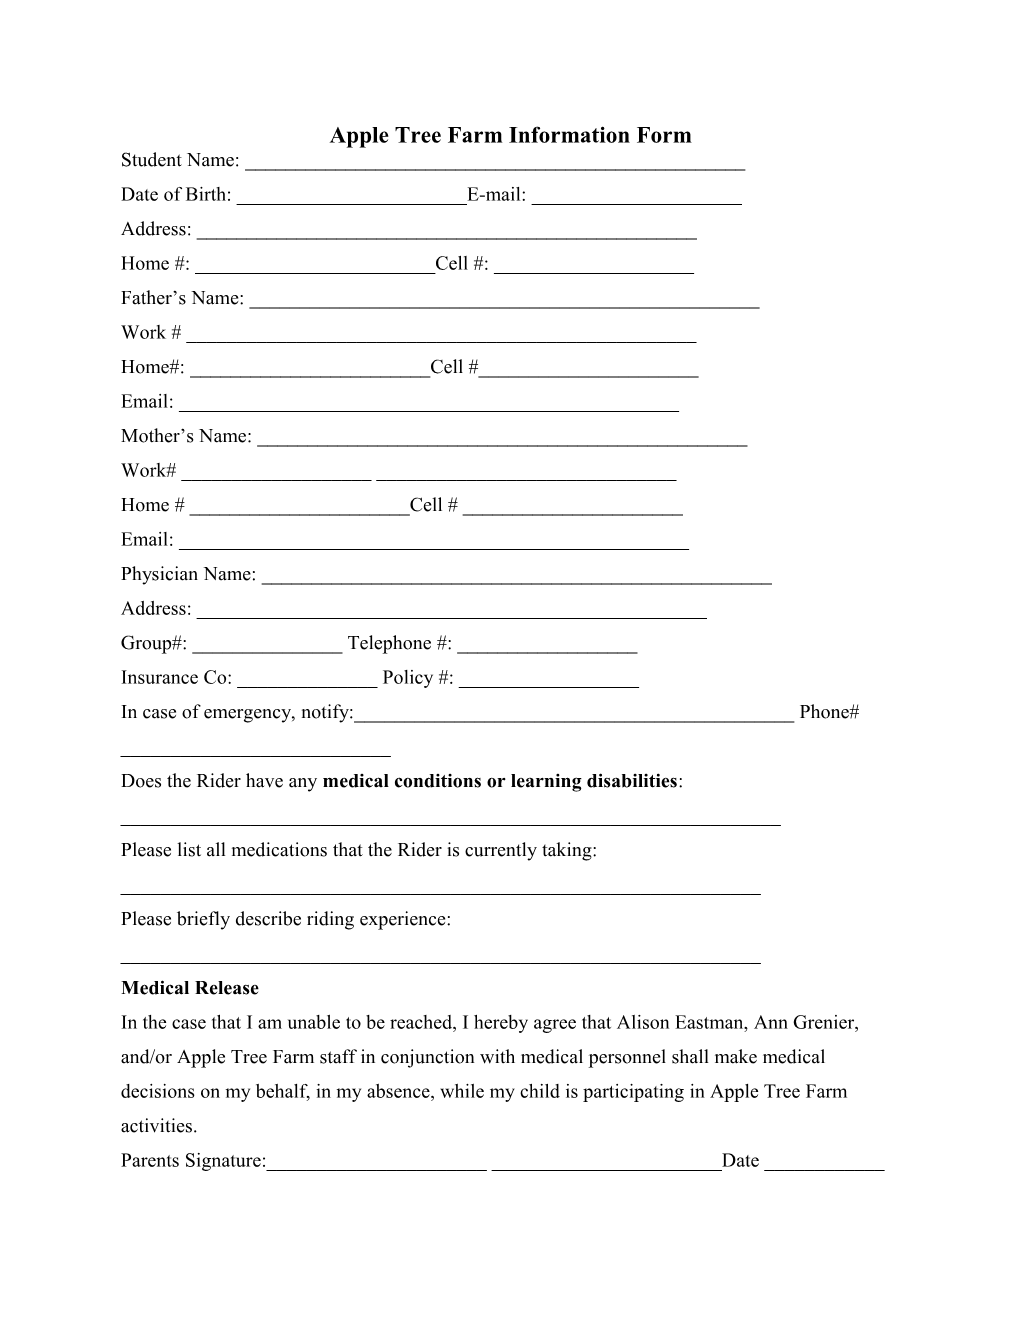 Apple Tree Farm Information Form